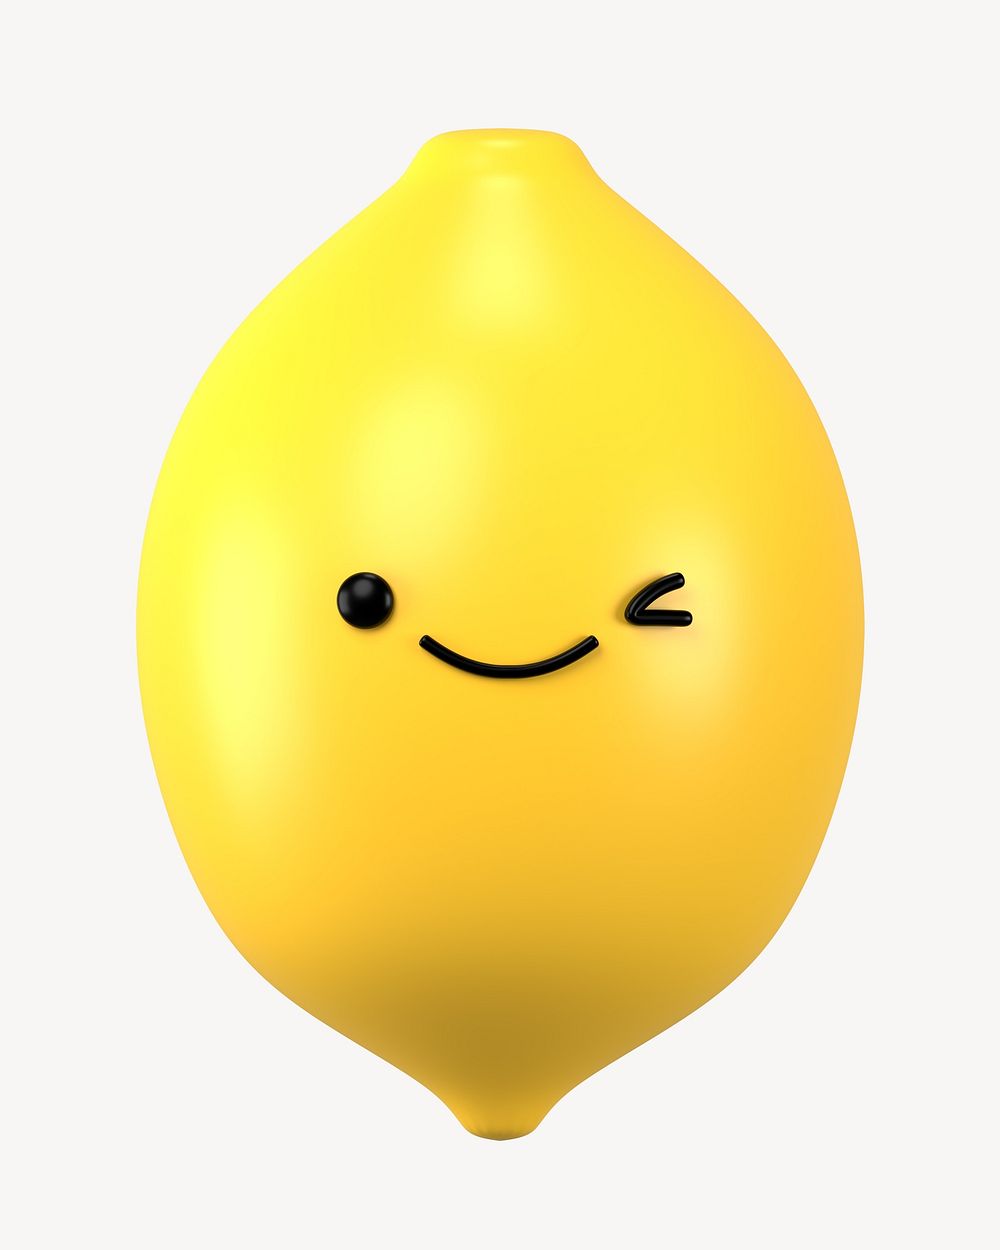 3D winking eyes lemon, emoticon illustration